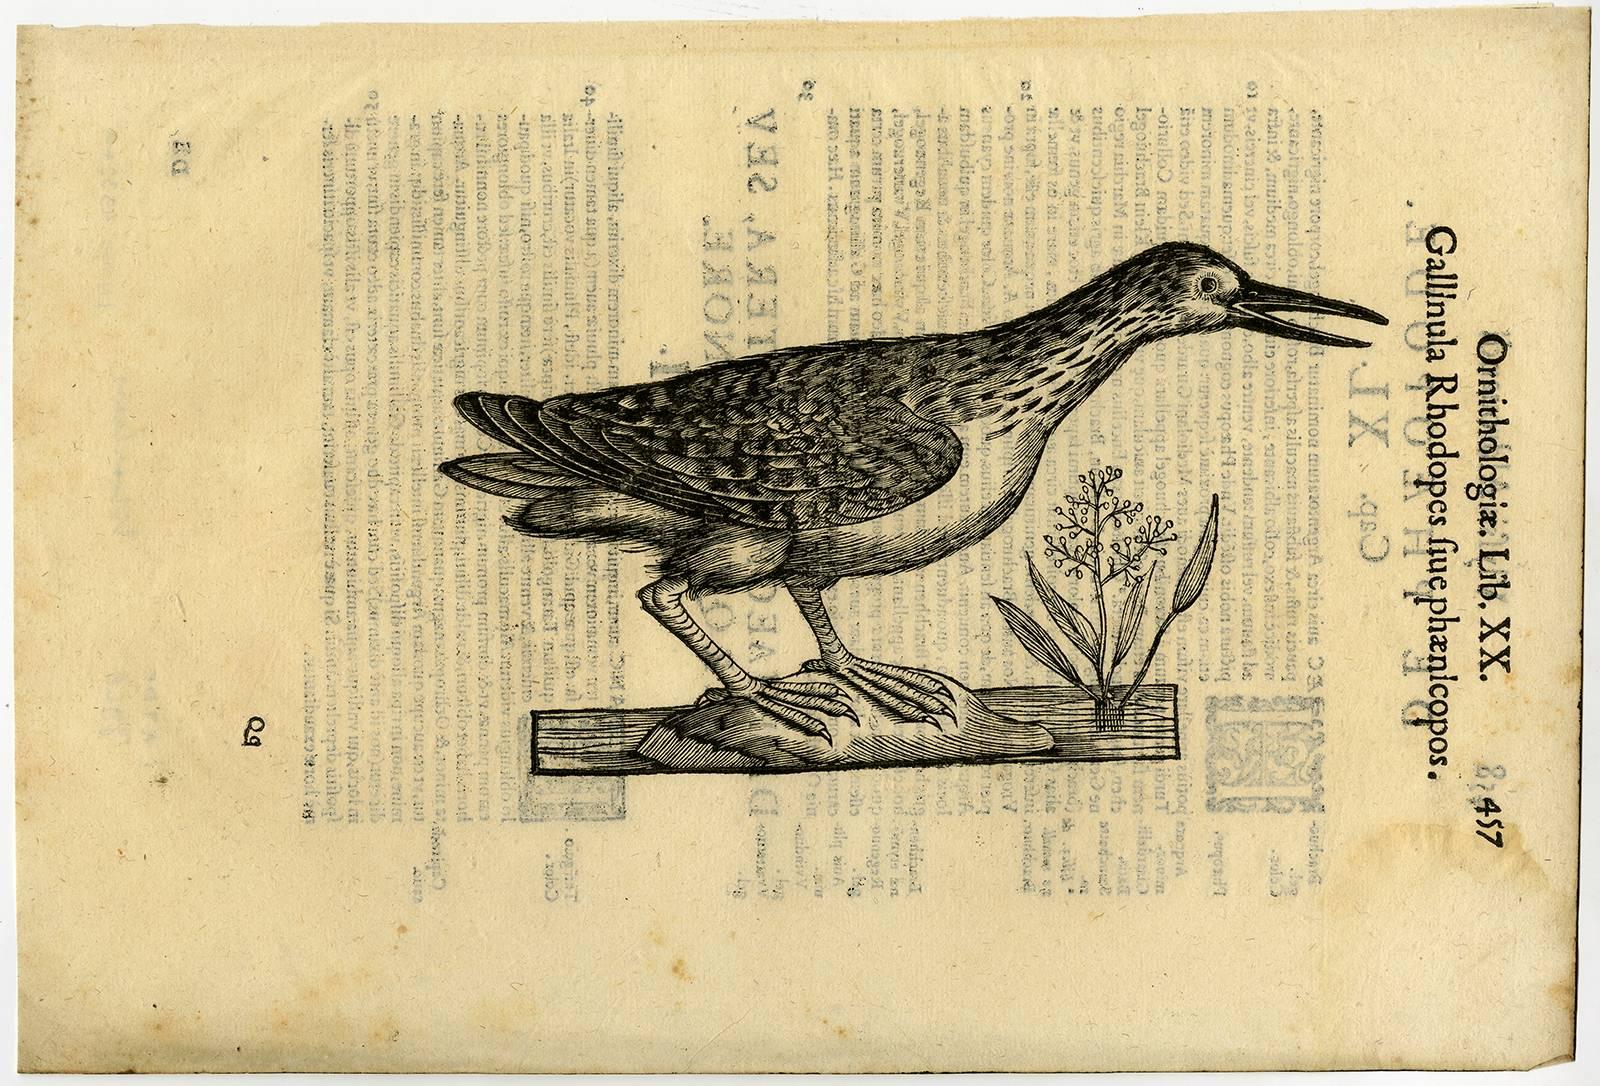 Cristoforo Coriolano Animal Print - Gallinula Rhodopes sive phaenicopos.